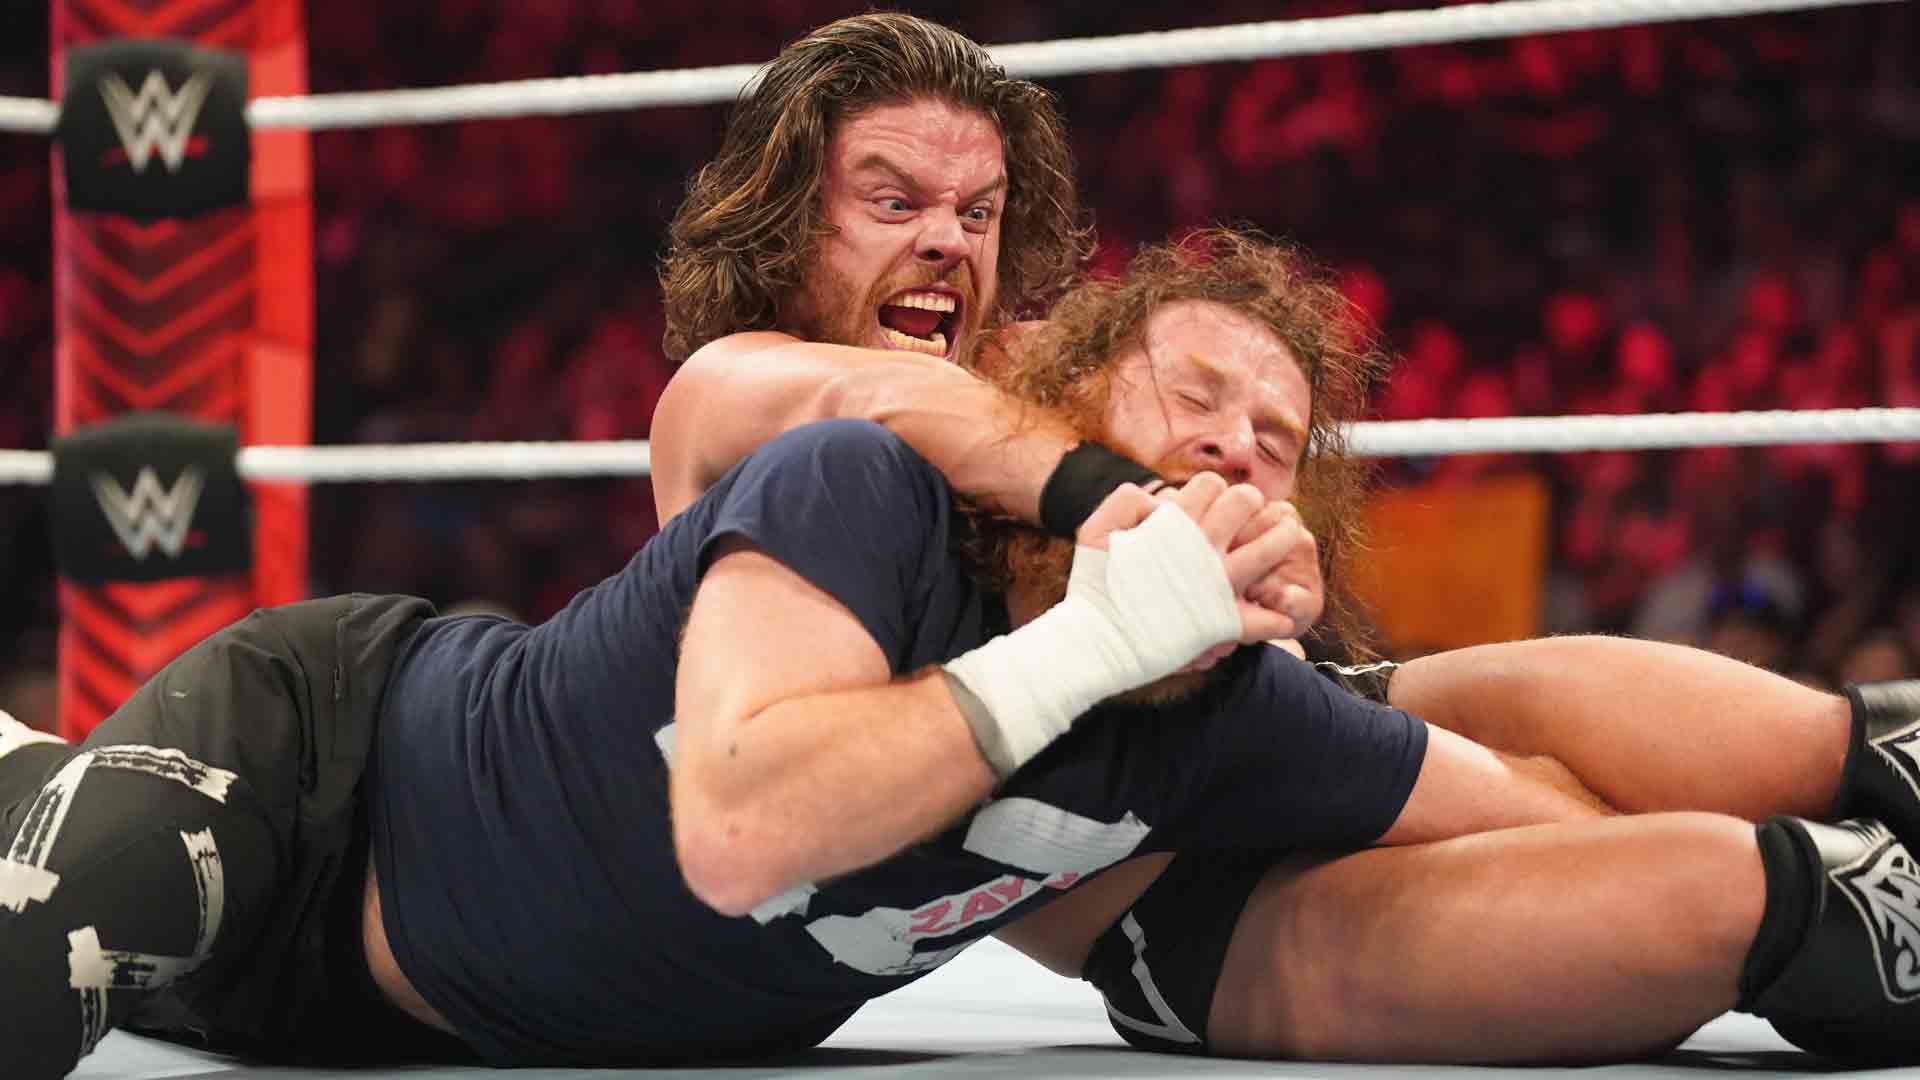 WWE confirma lesão de Sami Zayn